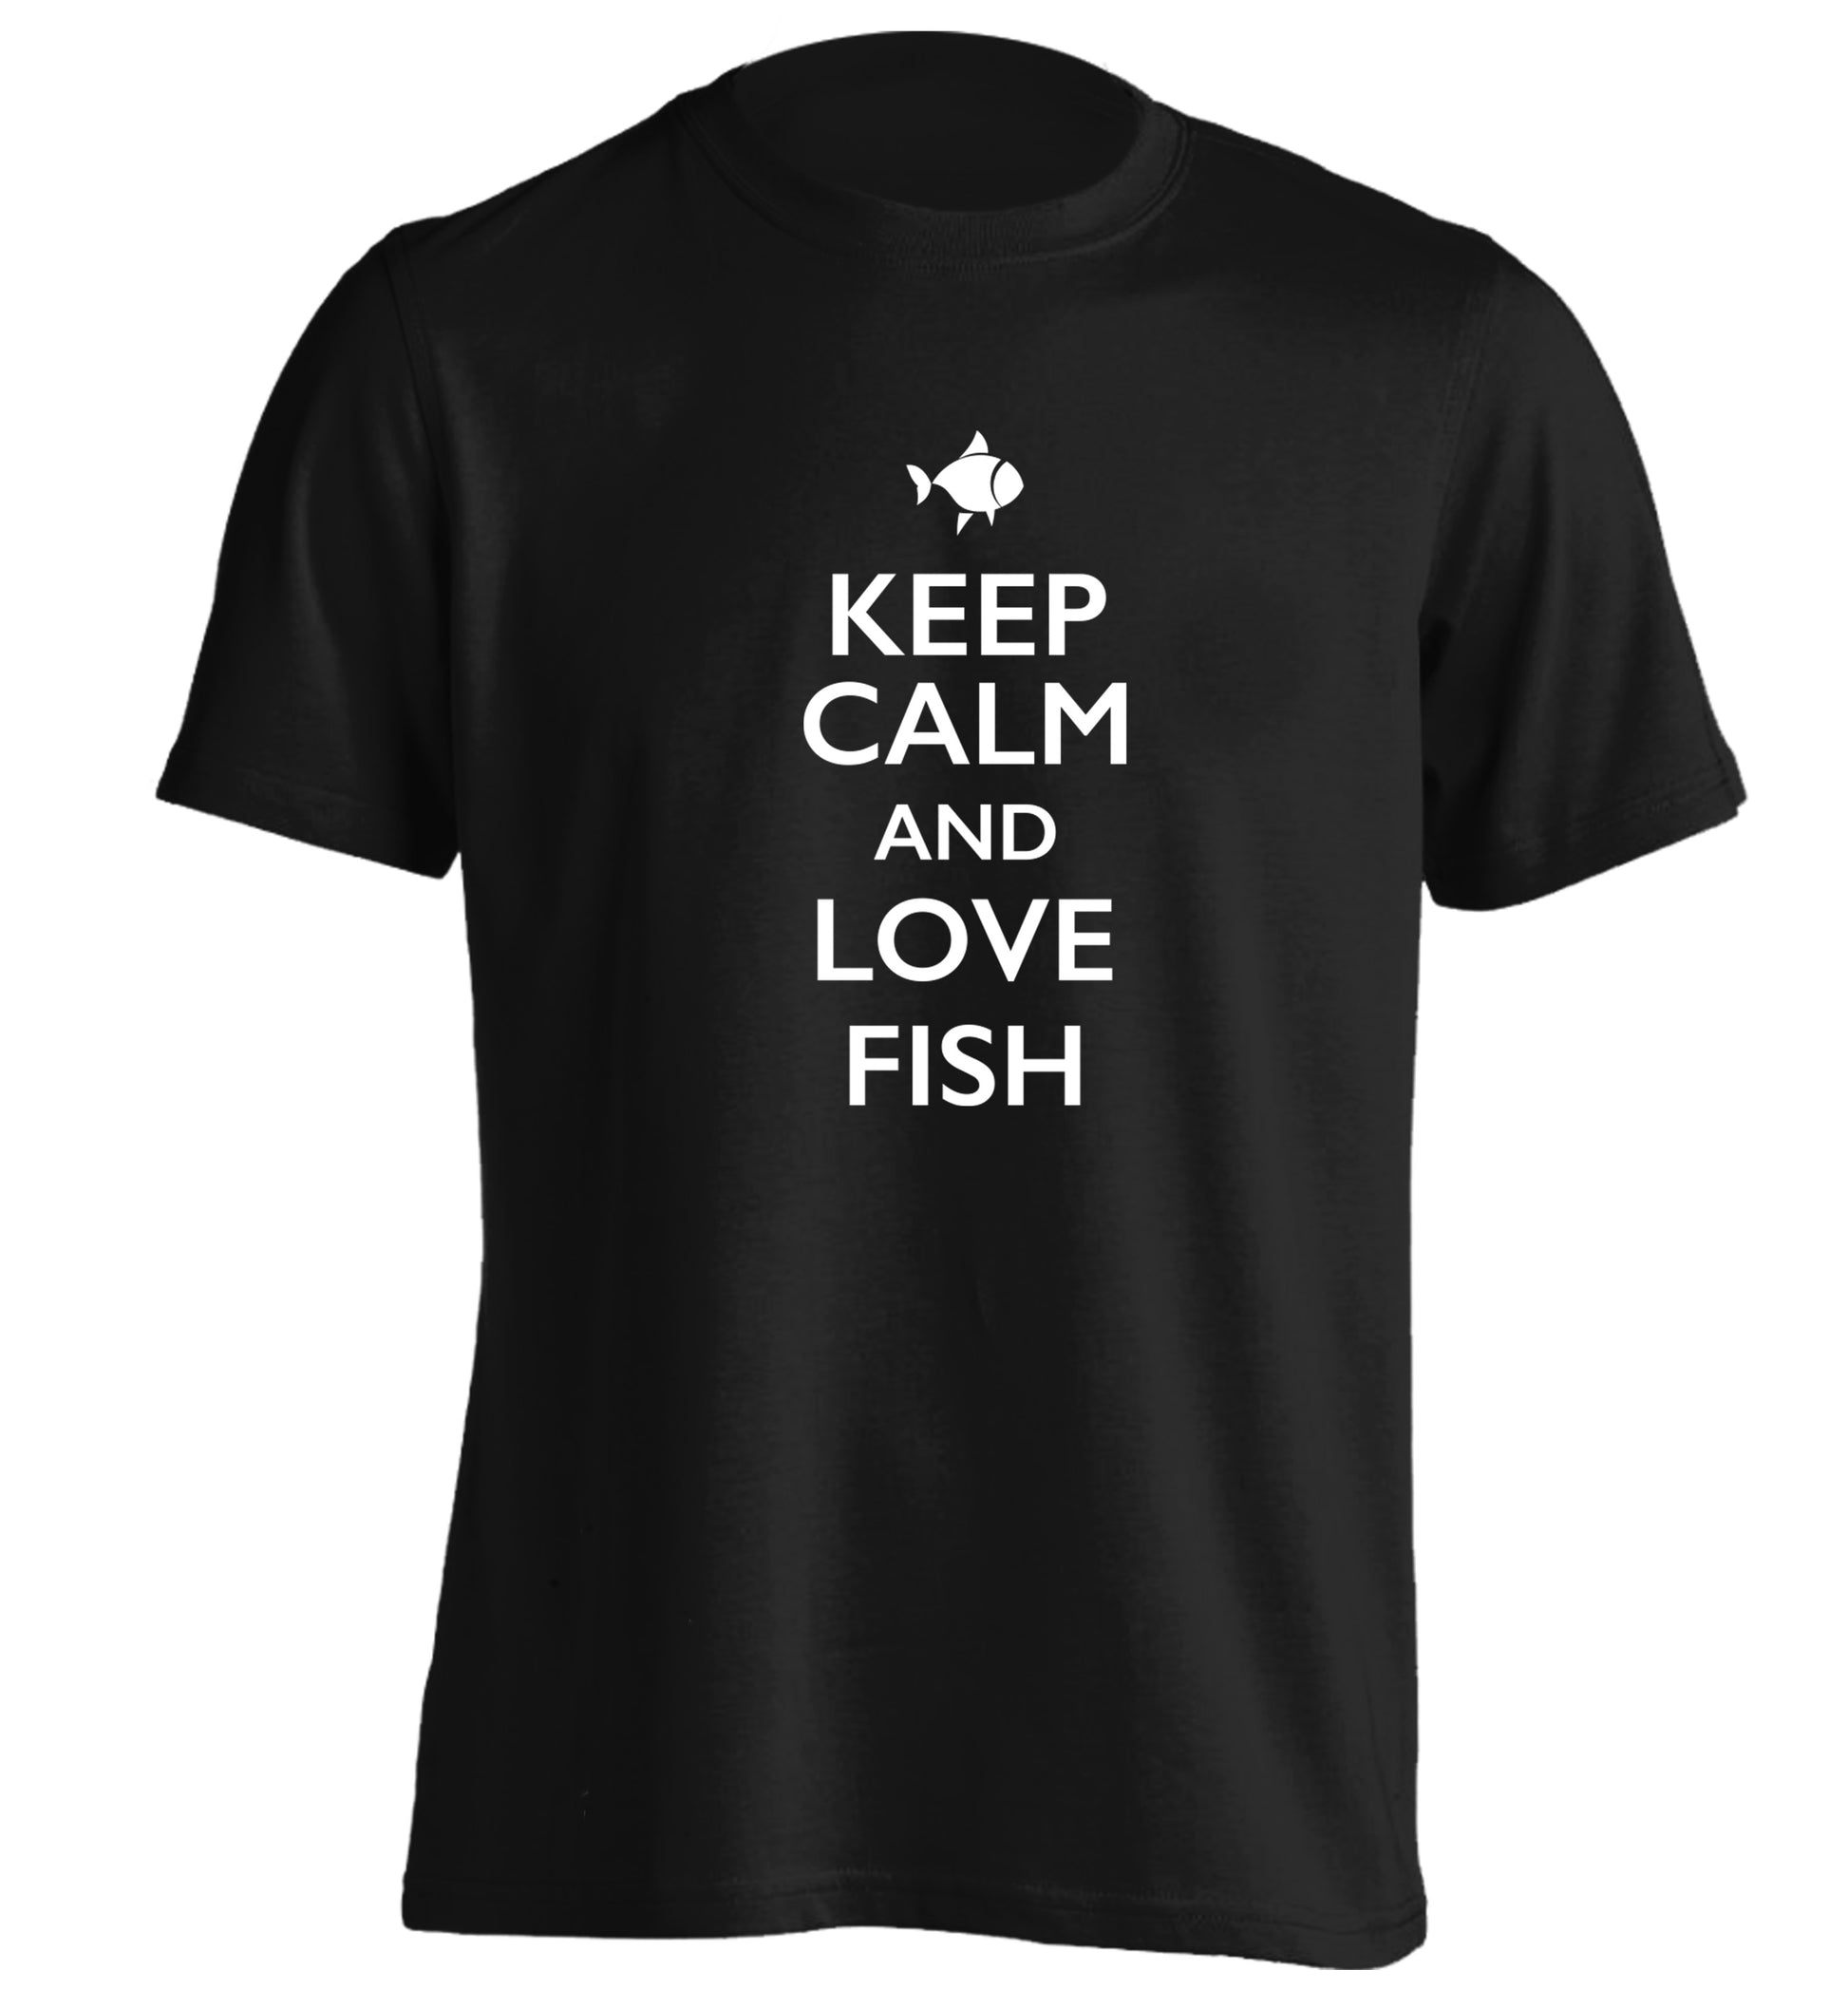 Keep calm and love fish adults unisex black Tshirt 2XL